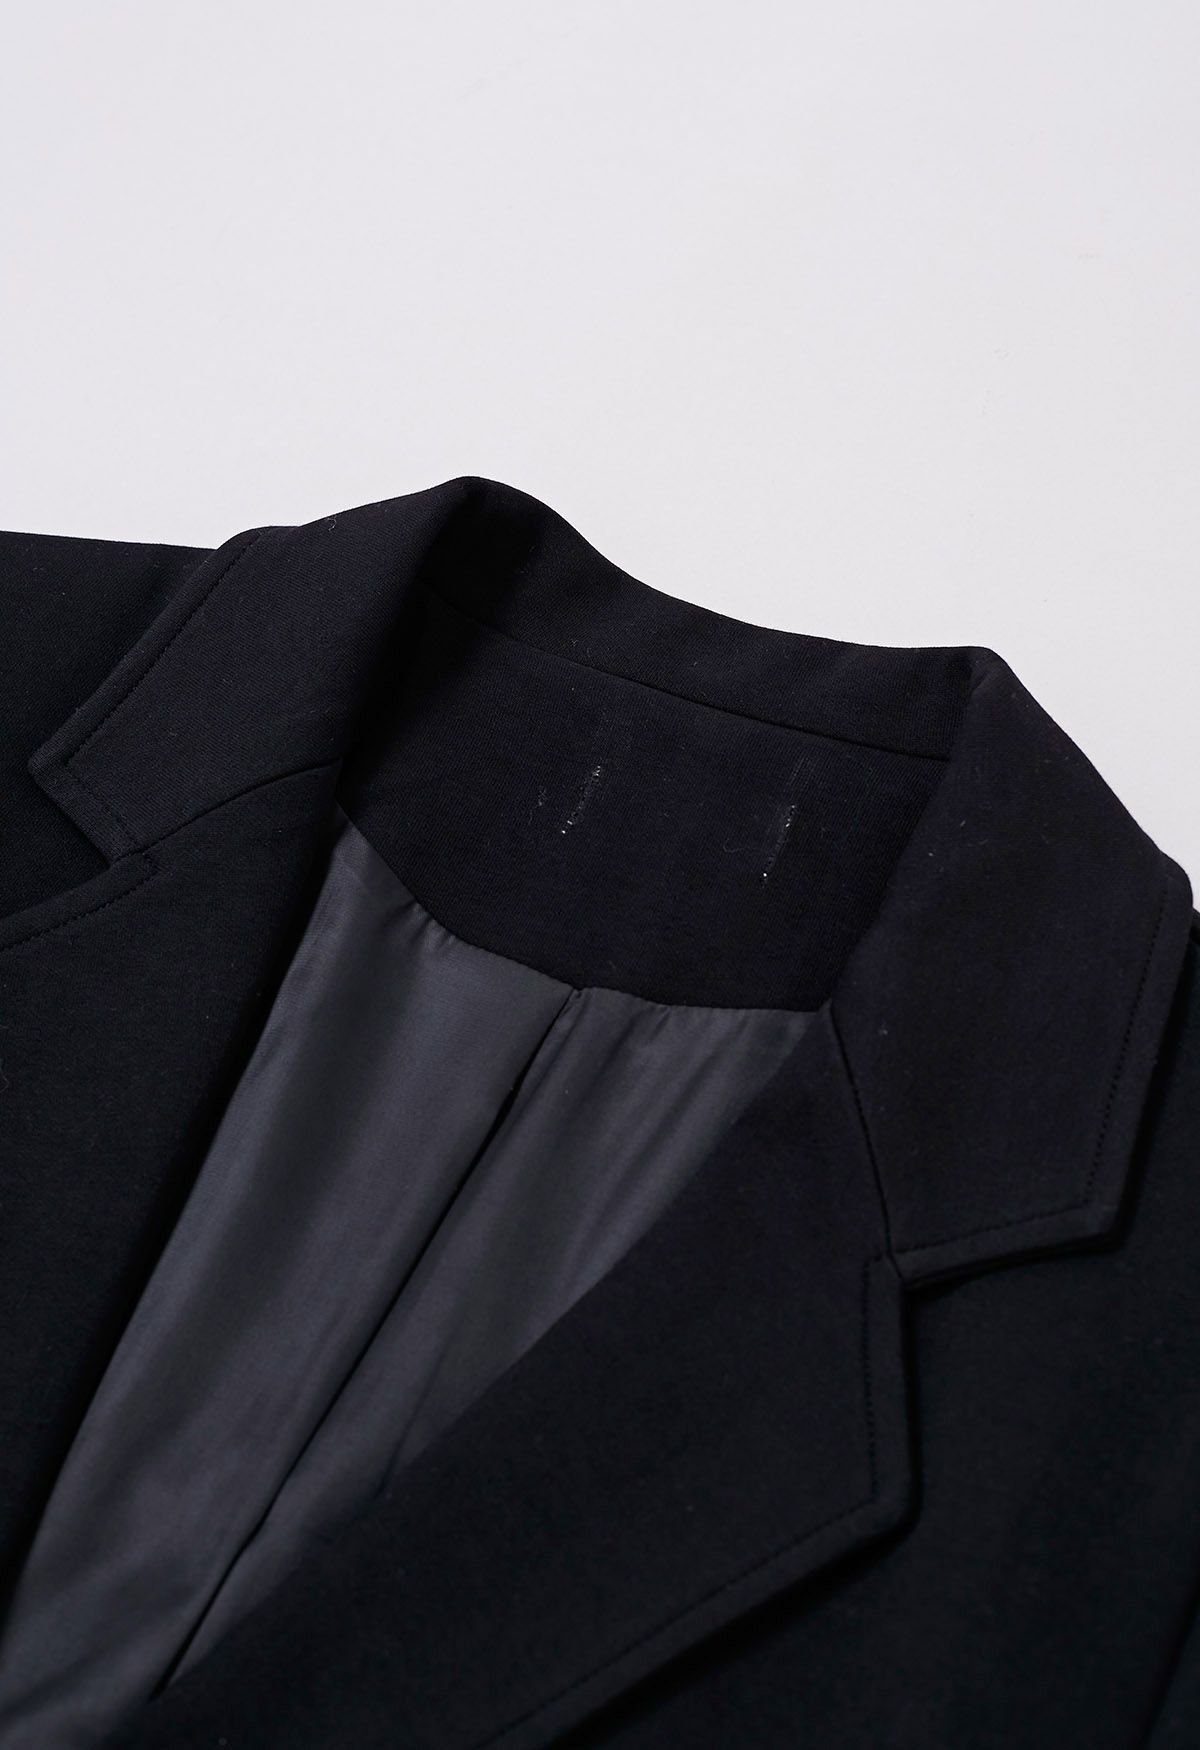 Notch Lapel Cotton-Blend Blazer in Black